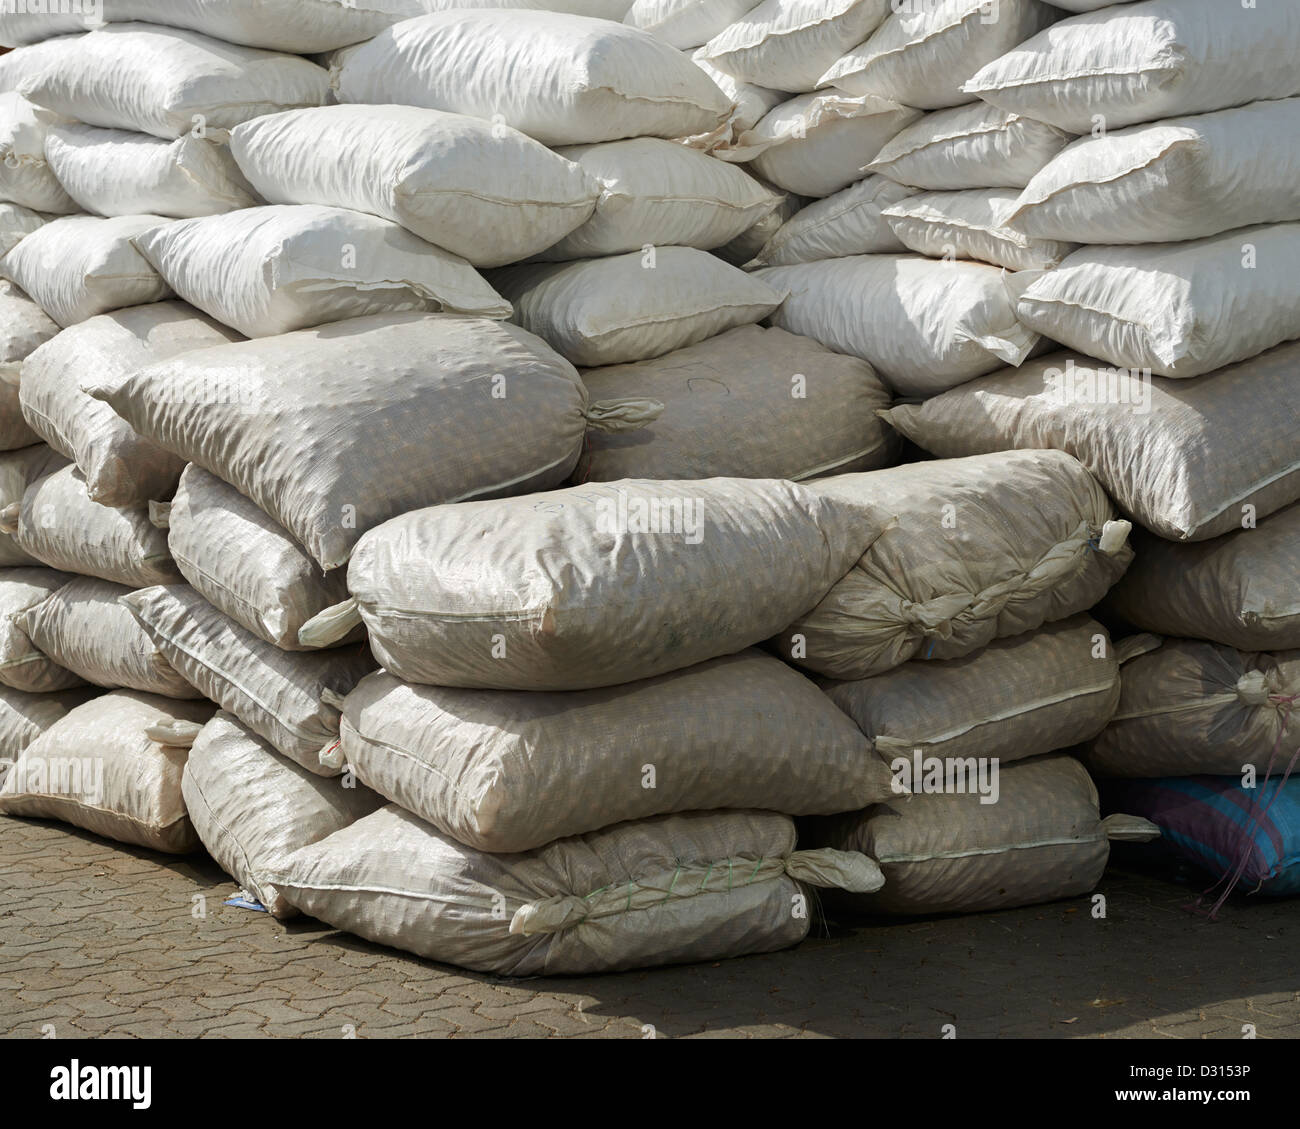 Huge sacks of goods in Dubai Stock Photo